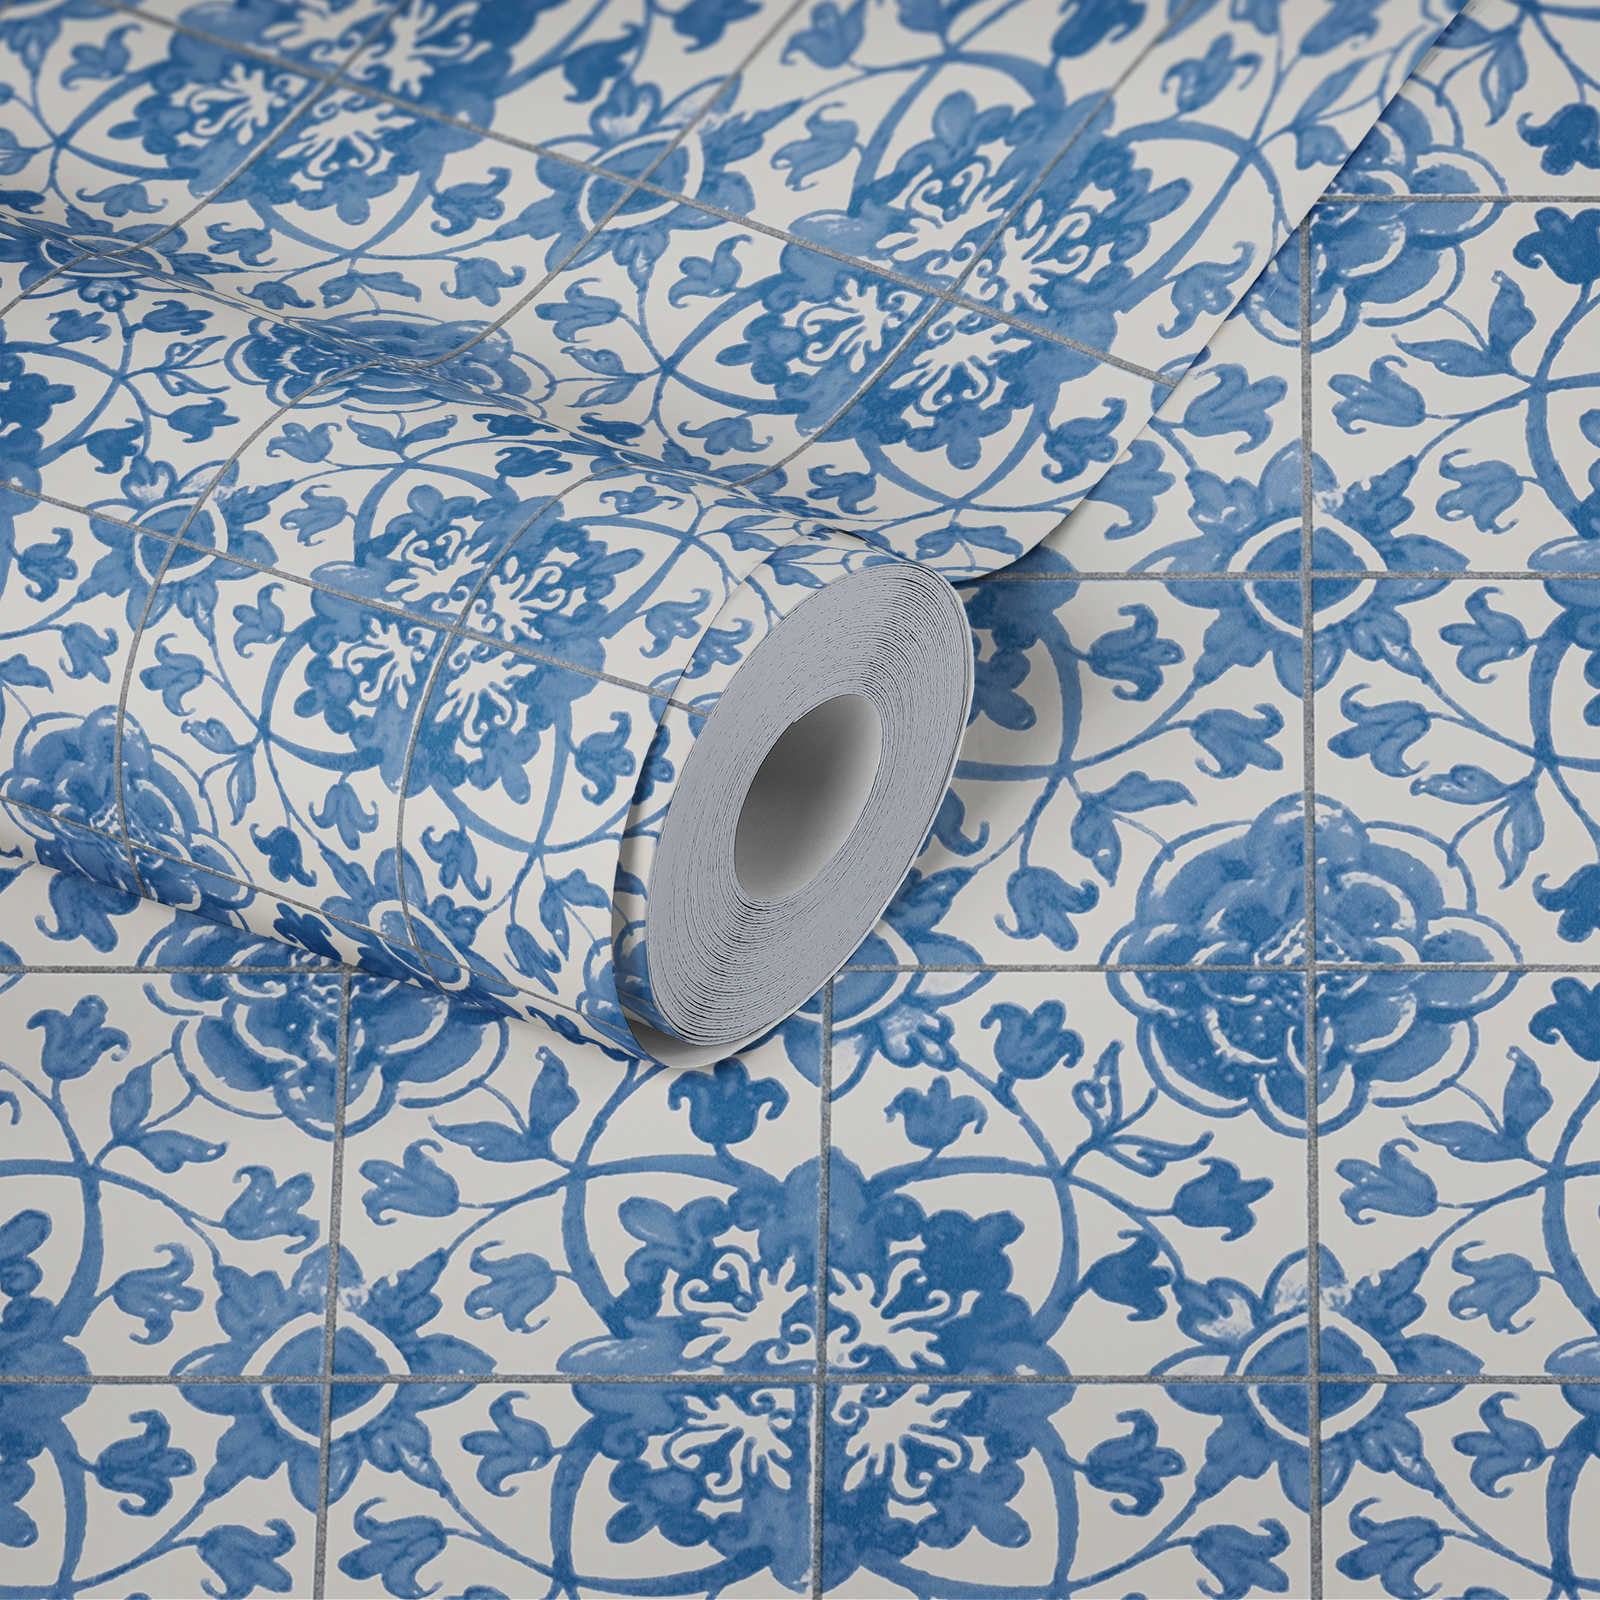             Zelfklevend behangpapier | Vintag style tile look - blauw, wit
        